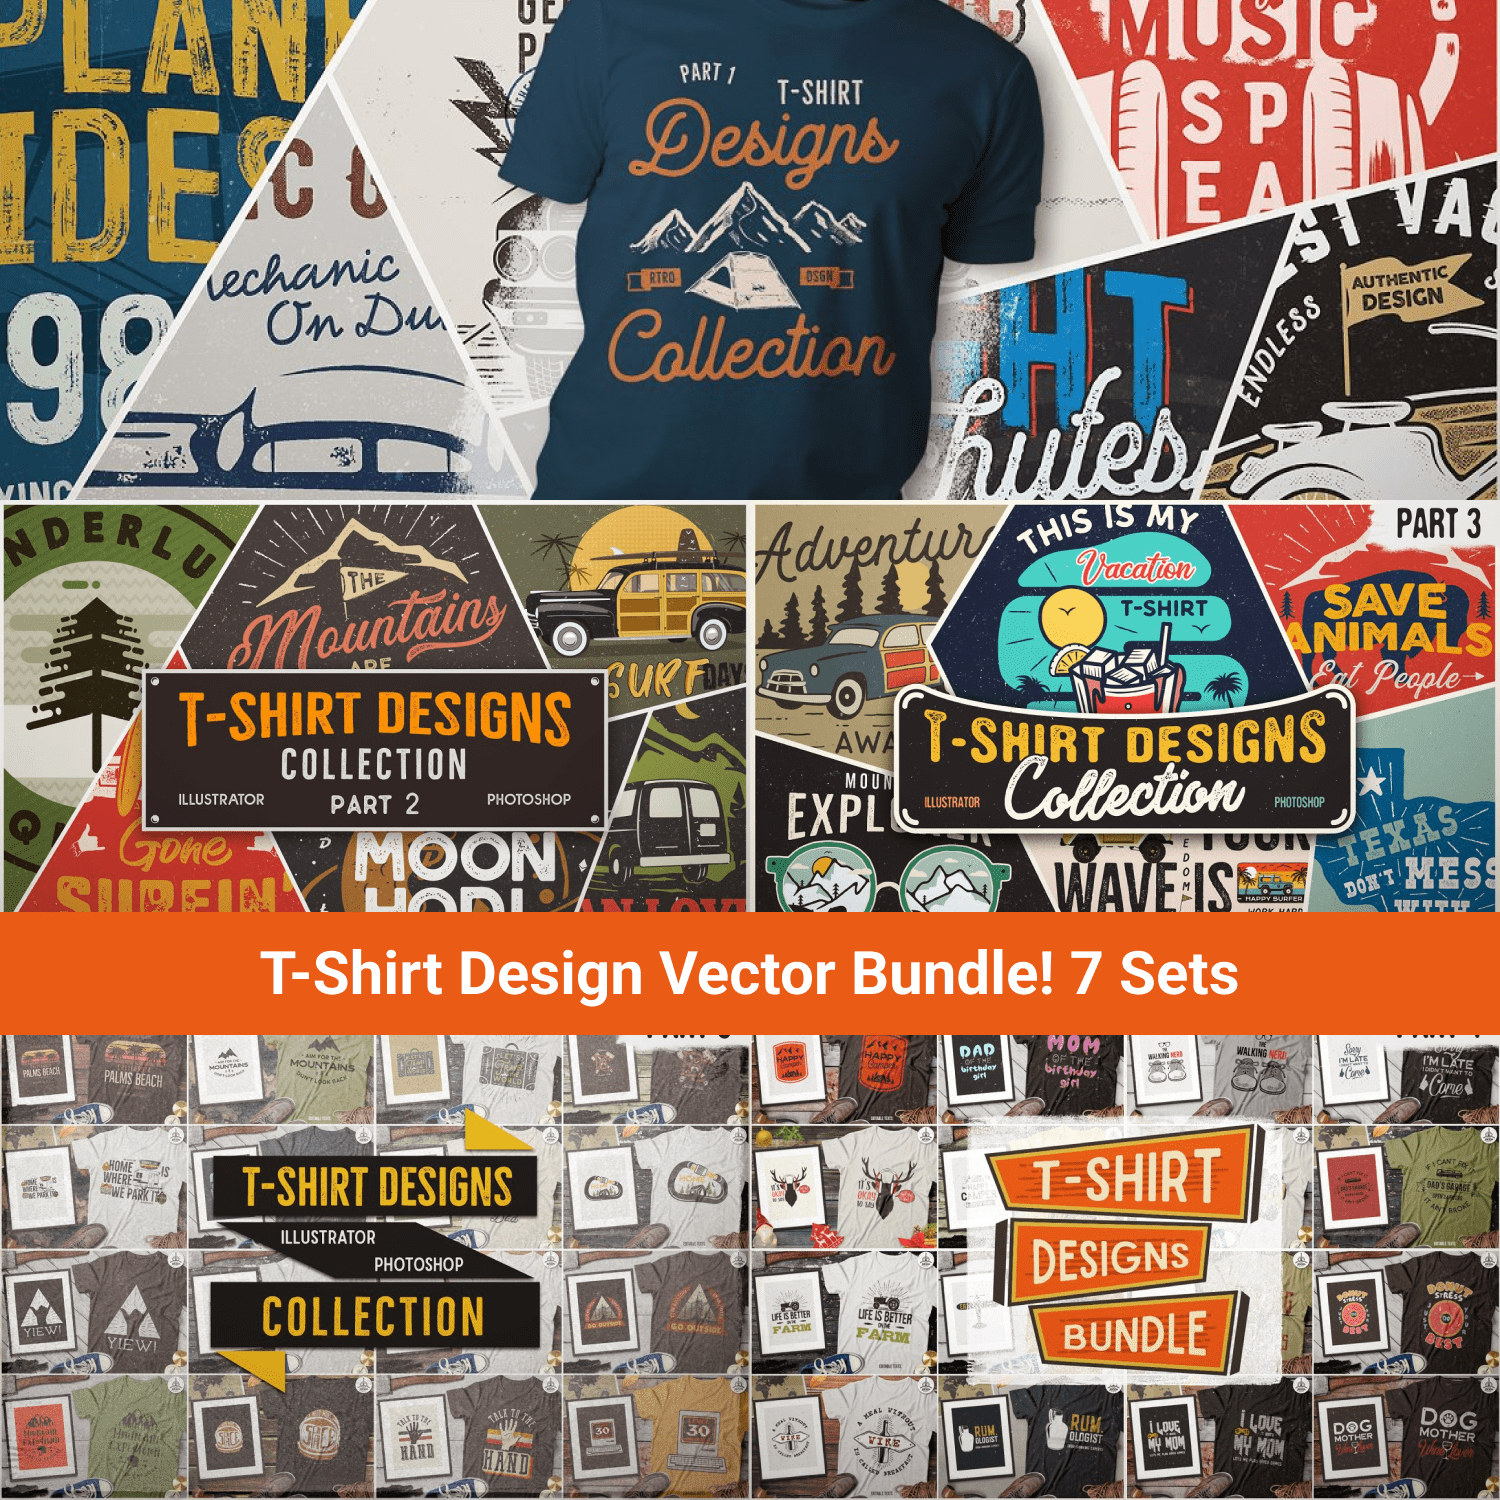 T-shirt design vector bundle - main image preview.